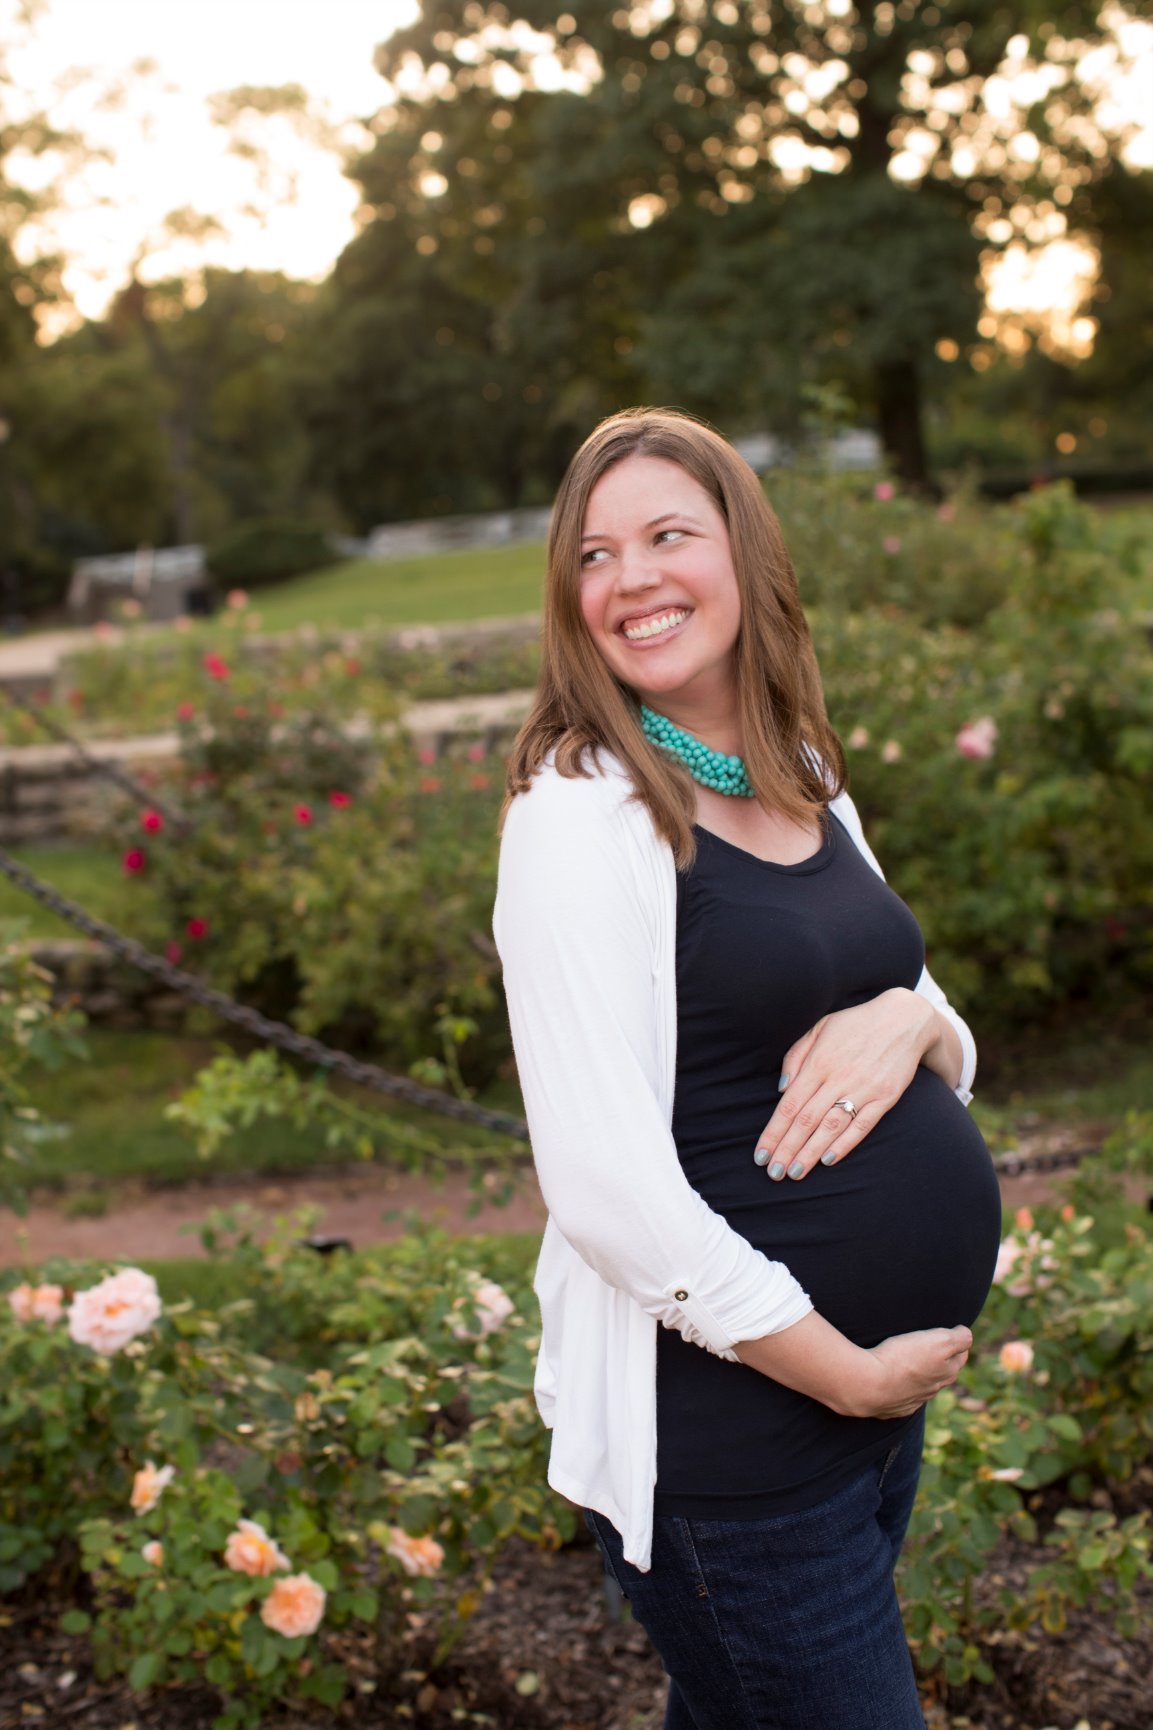 Maternity Session Among the Roses - Kansas City Maternity Photographer ...